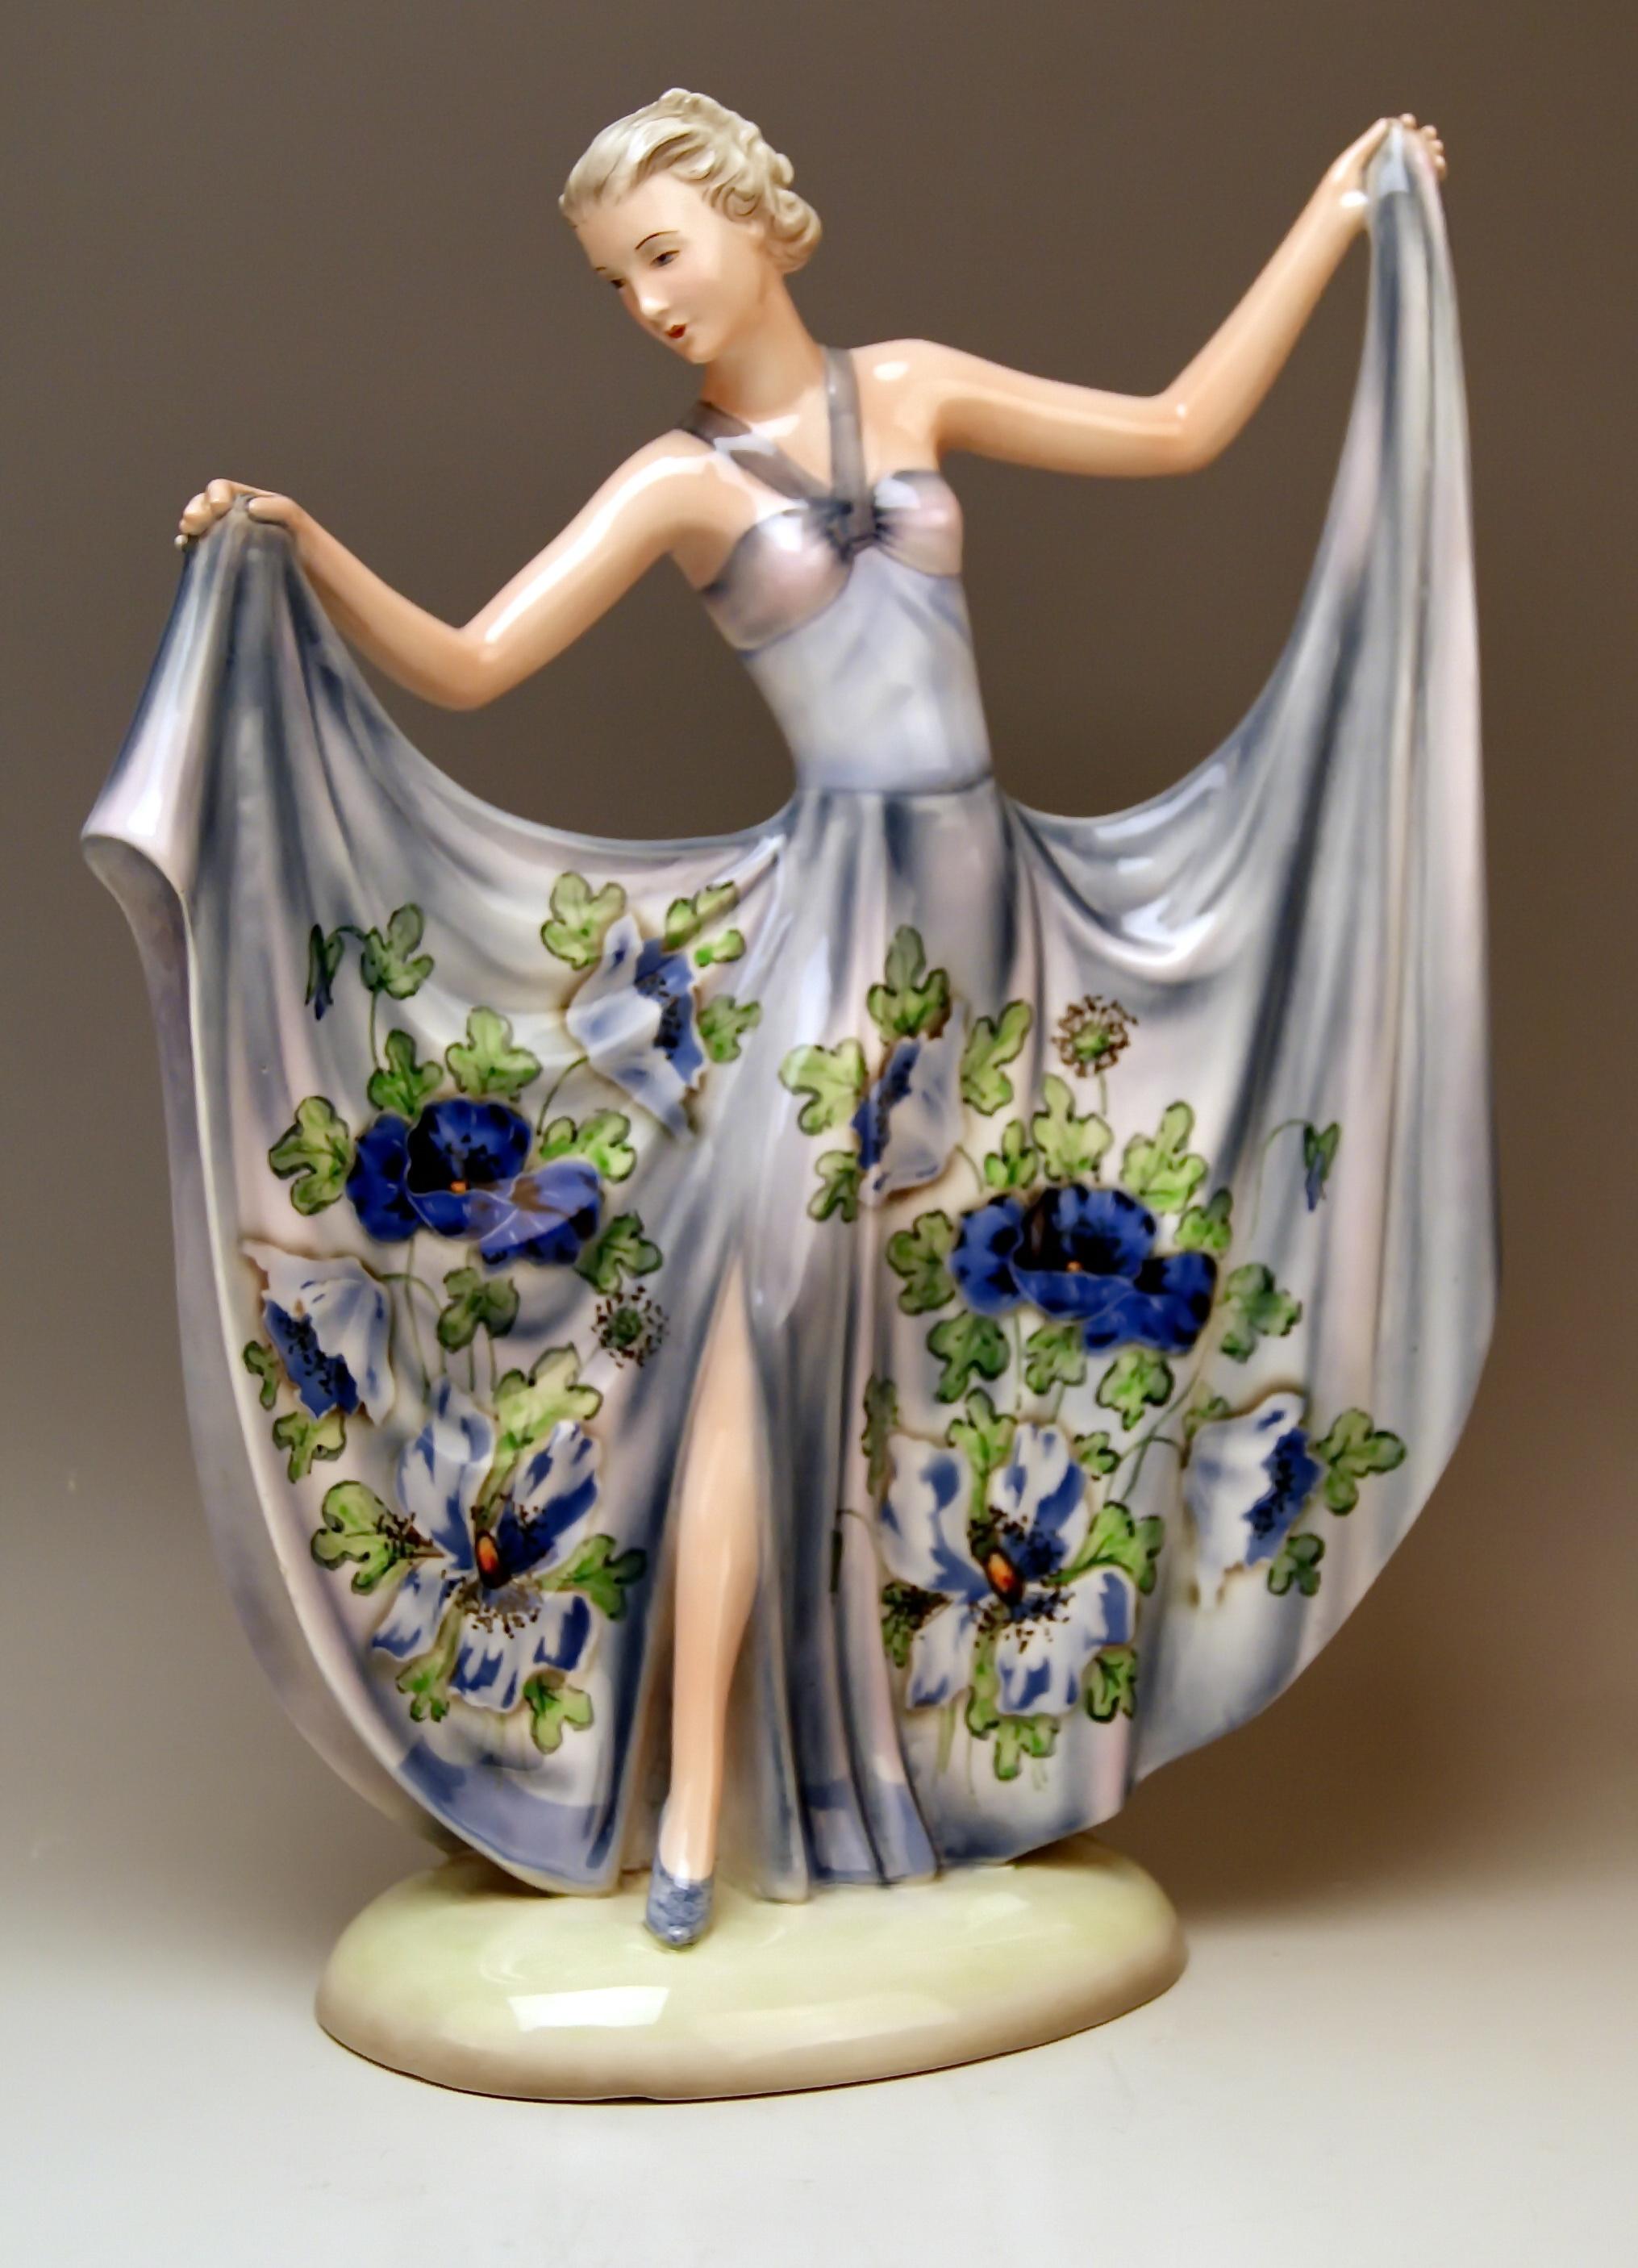 Goldscheider vienna stunning tall lady figurine: lady dancer.
This model is called in German 